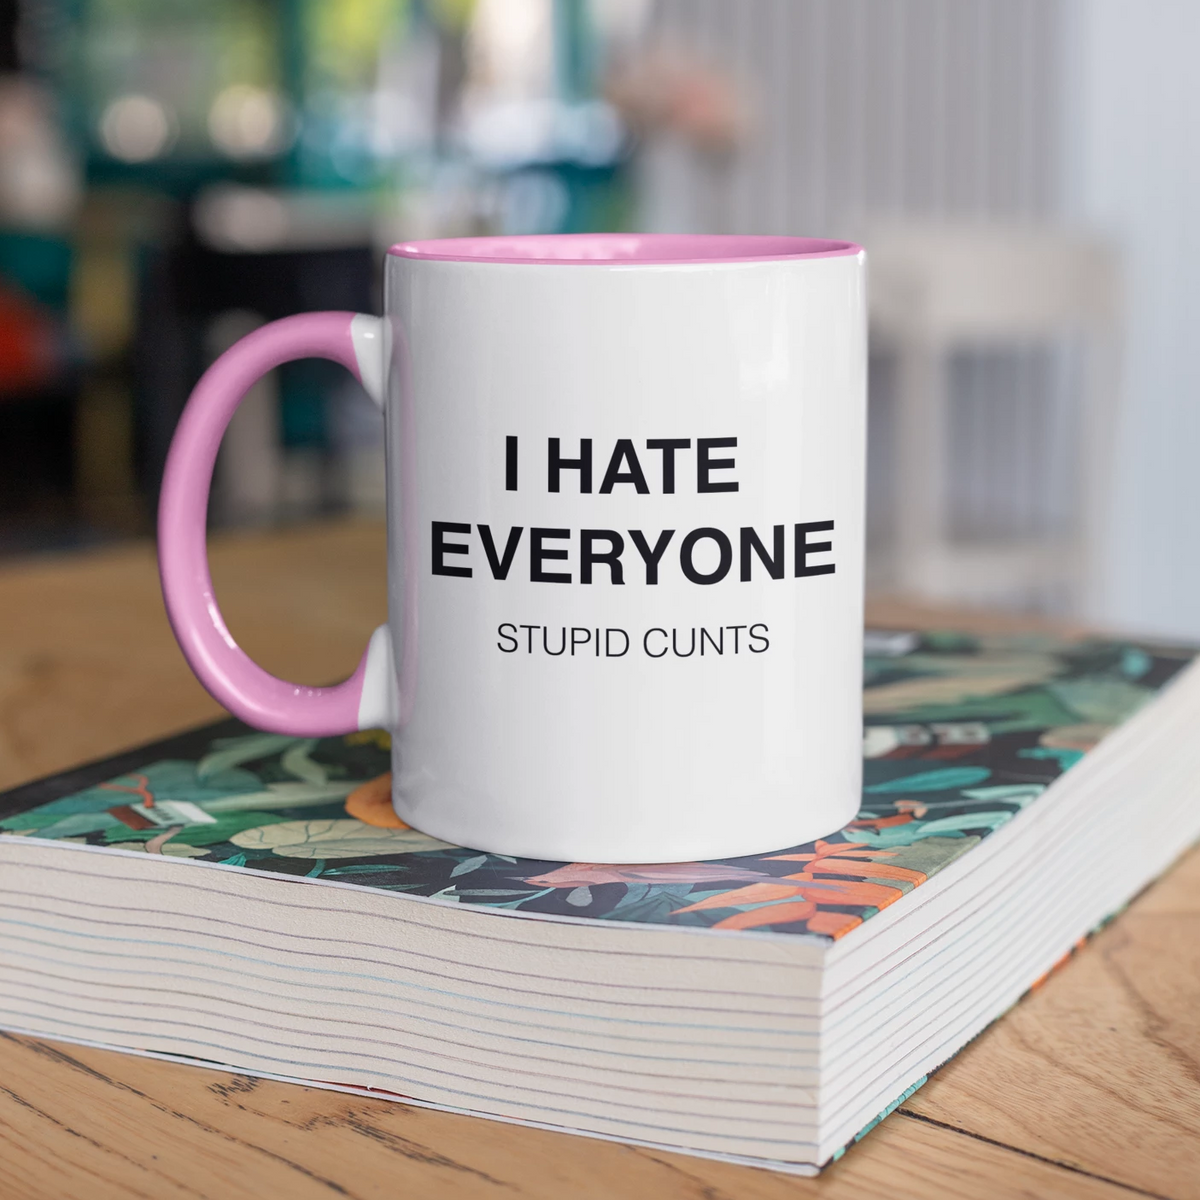 I Hate Everyone. Stupid Cunts Mug